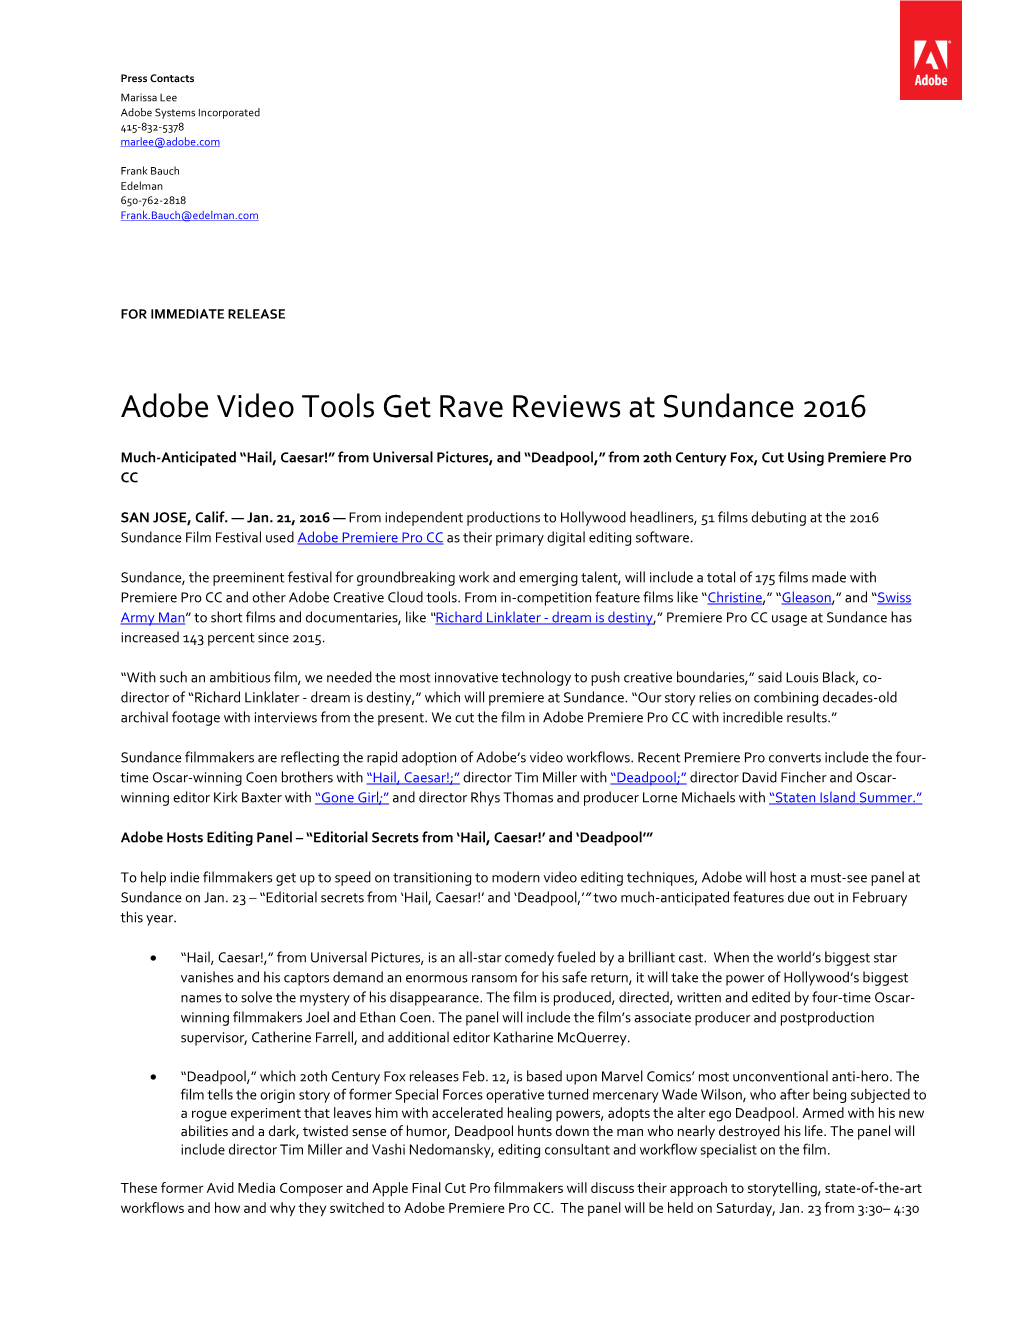 Adobe Video Tools Get Rave Reviews at Sundance 2016